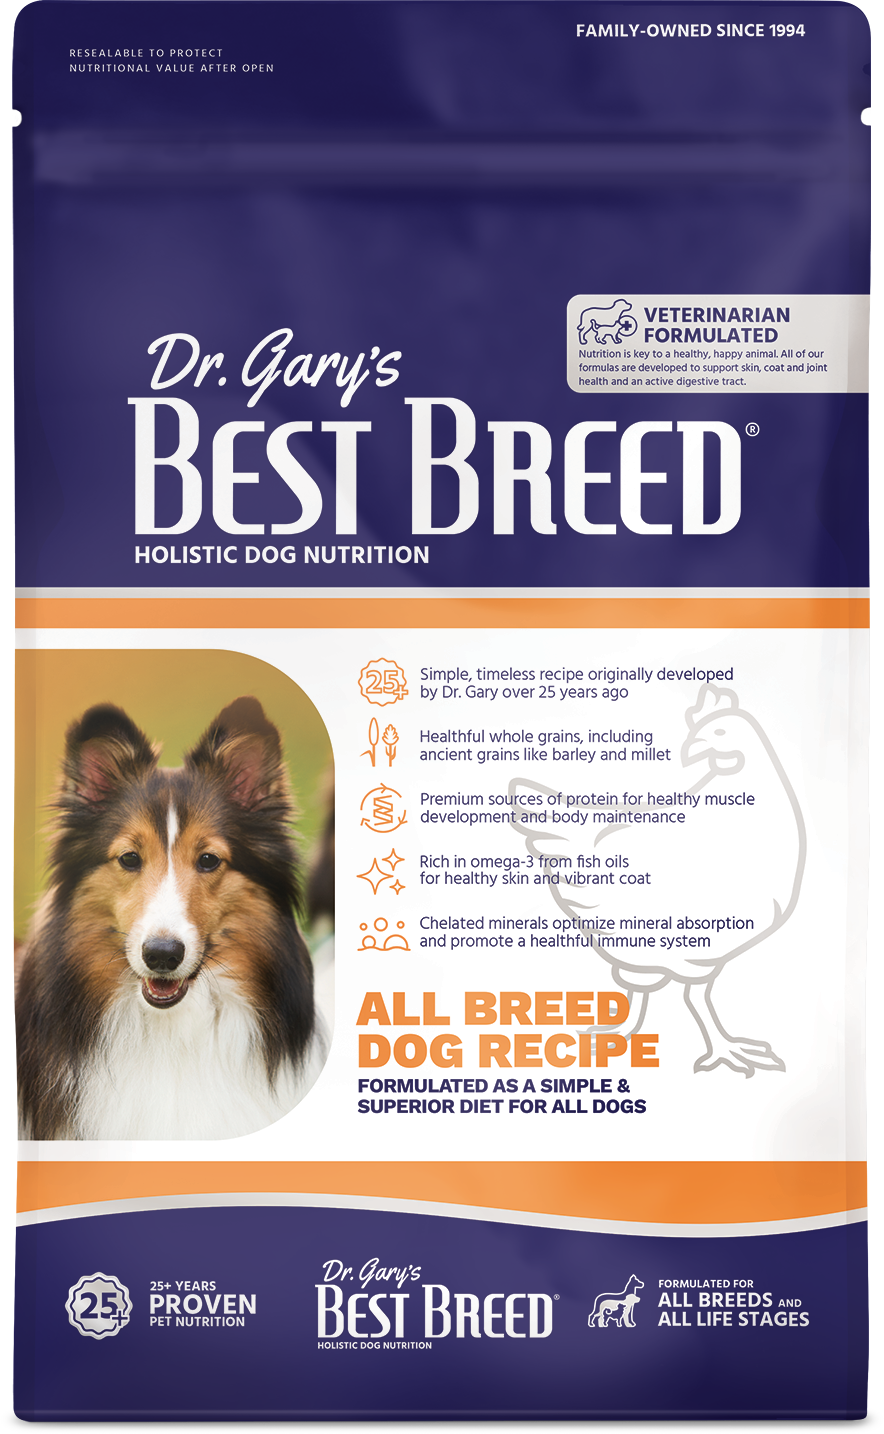 All Breed Dog Recipe